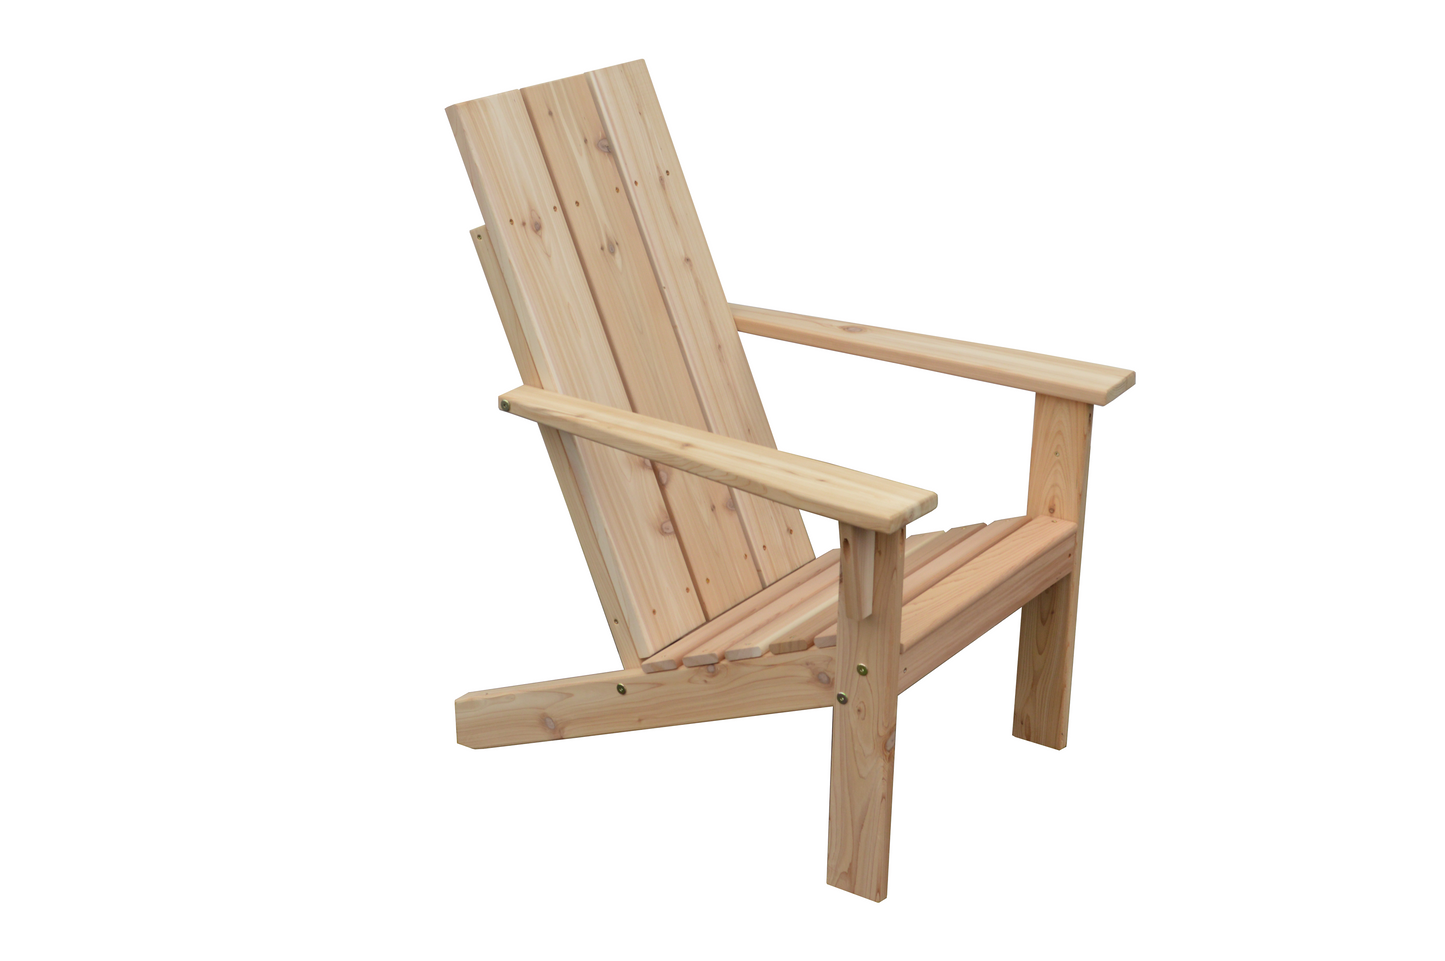 A&L FURNITURE CO. Western Red Cedar Modern Adirondack Chair - LEAD TIME TO SHIP 2 WEEKS